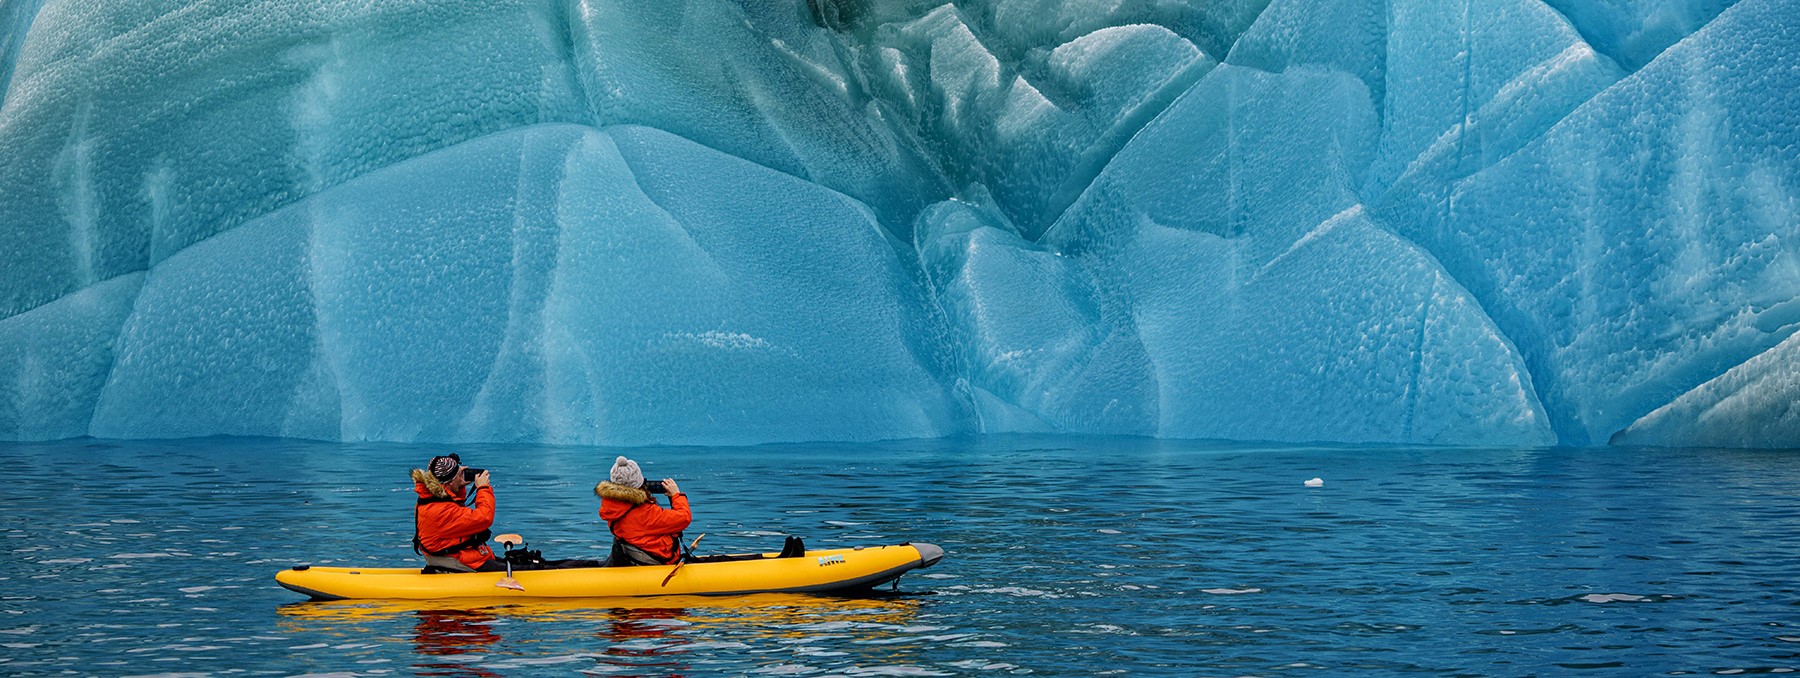 Inspirato members kayaking among icebergs on the 2022 Inspirato Antarctica cruise